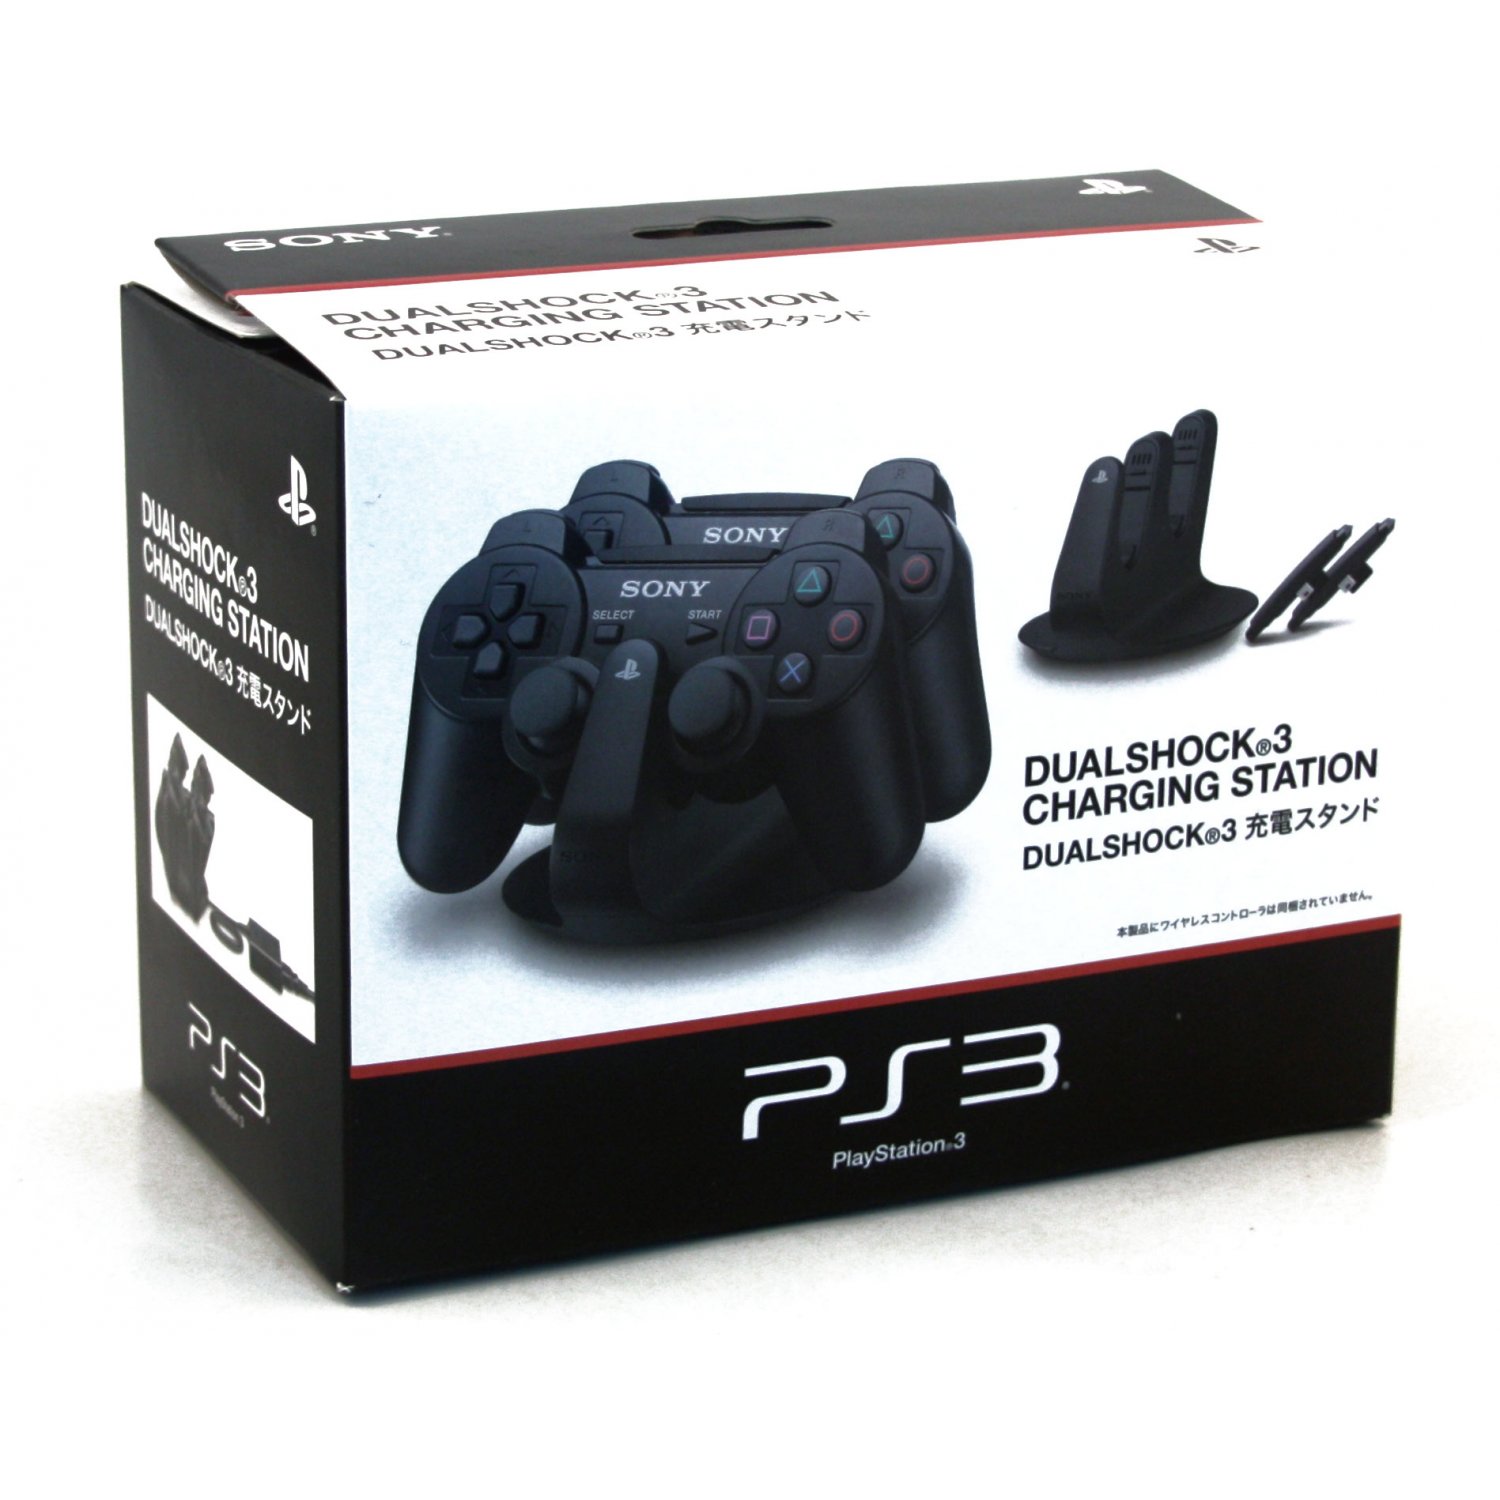 DualShock 3 Charging Station (JP, újszerű) - PlayStation 3 Kiegészítők